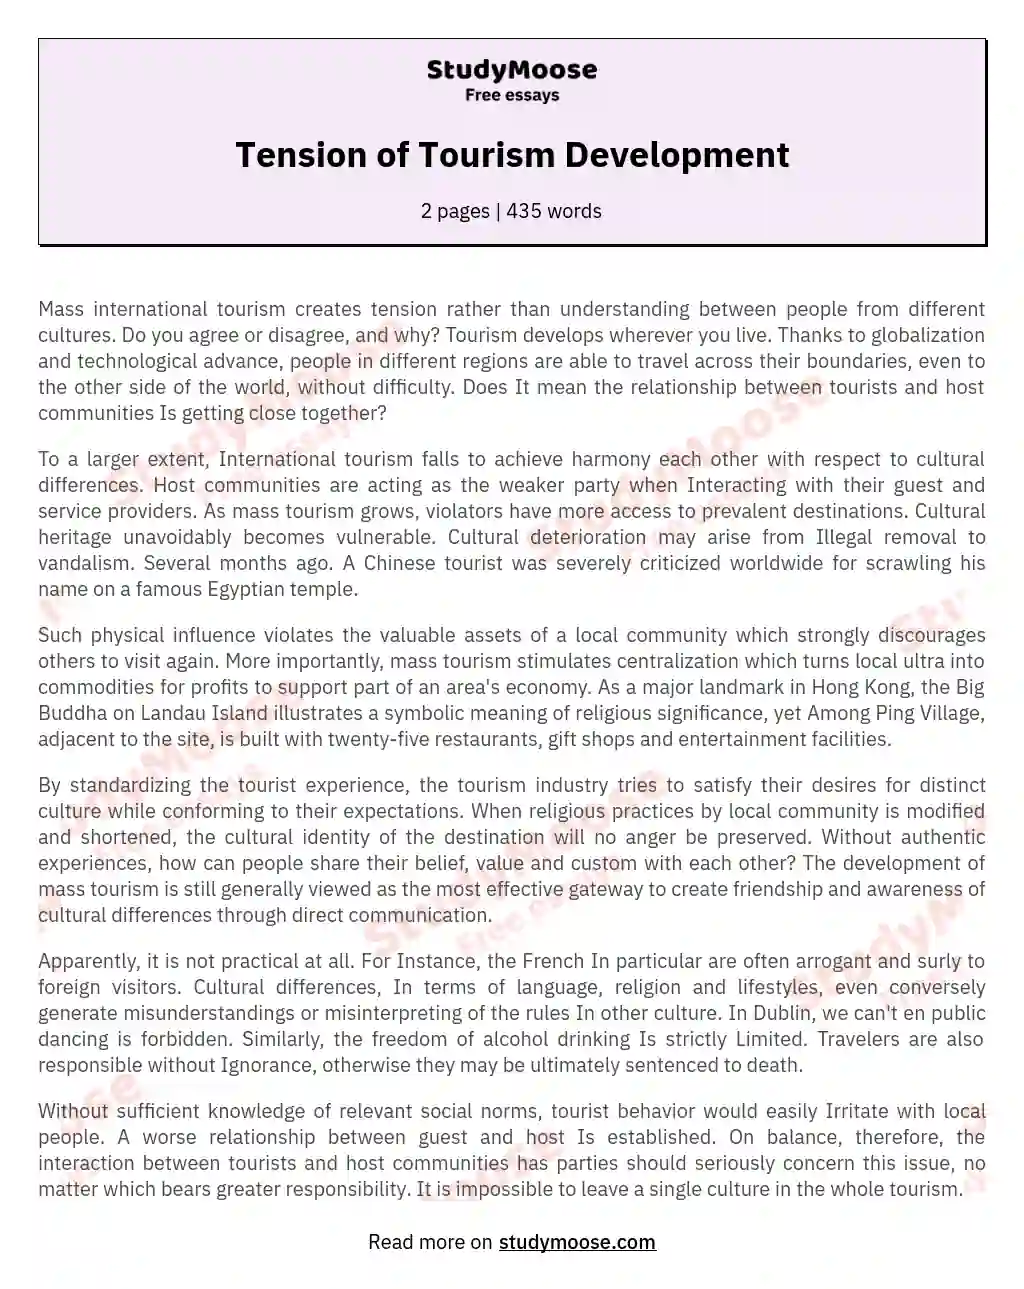 Tension of Tourism Development essay